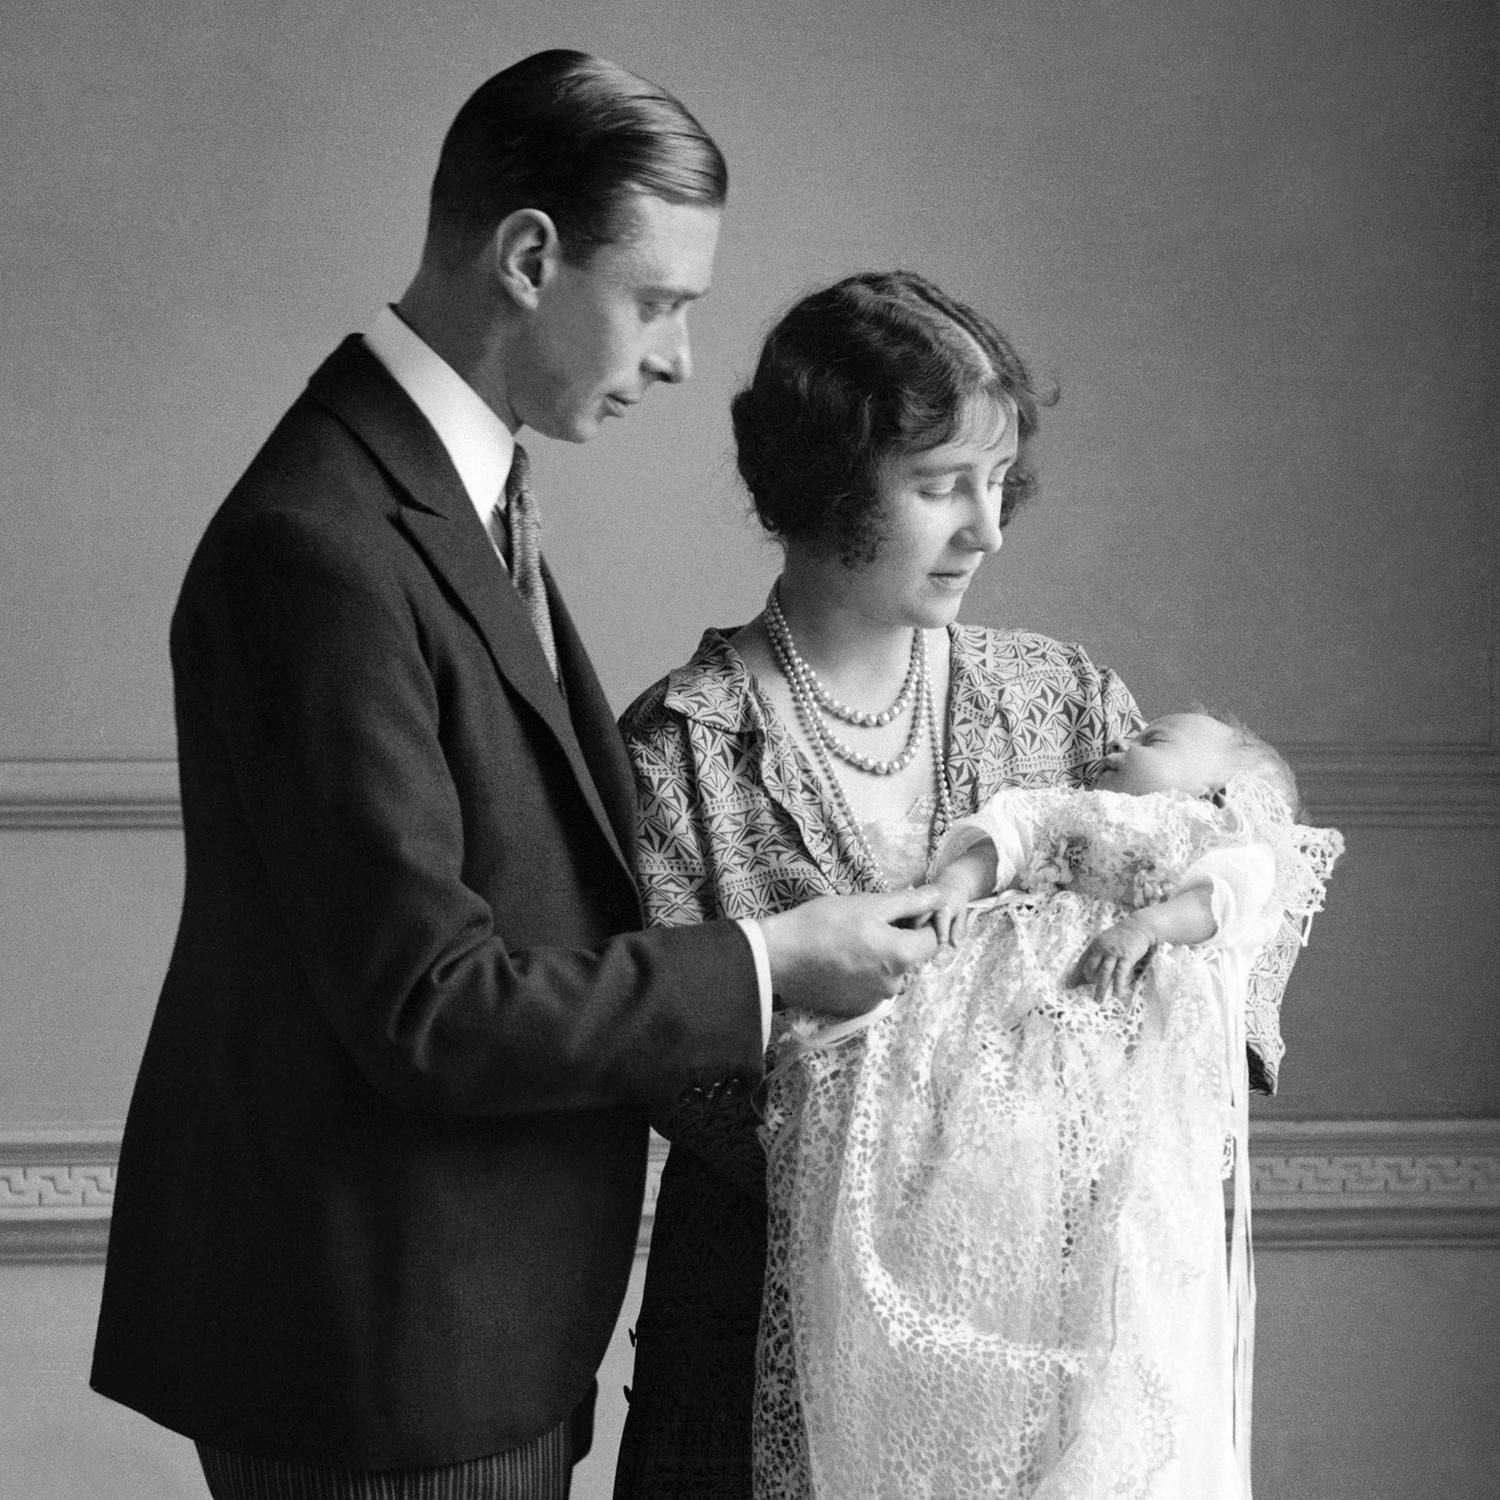 King George VI and Lady Elizabeth Bowes-Lyon